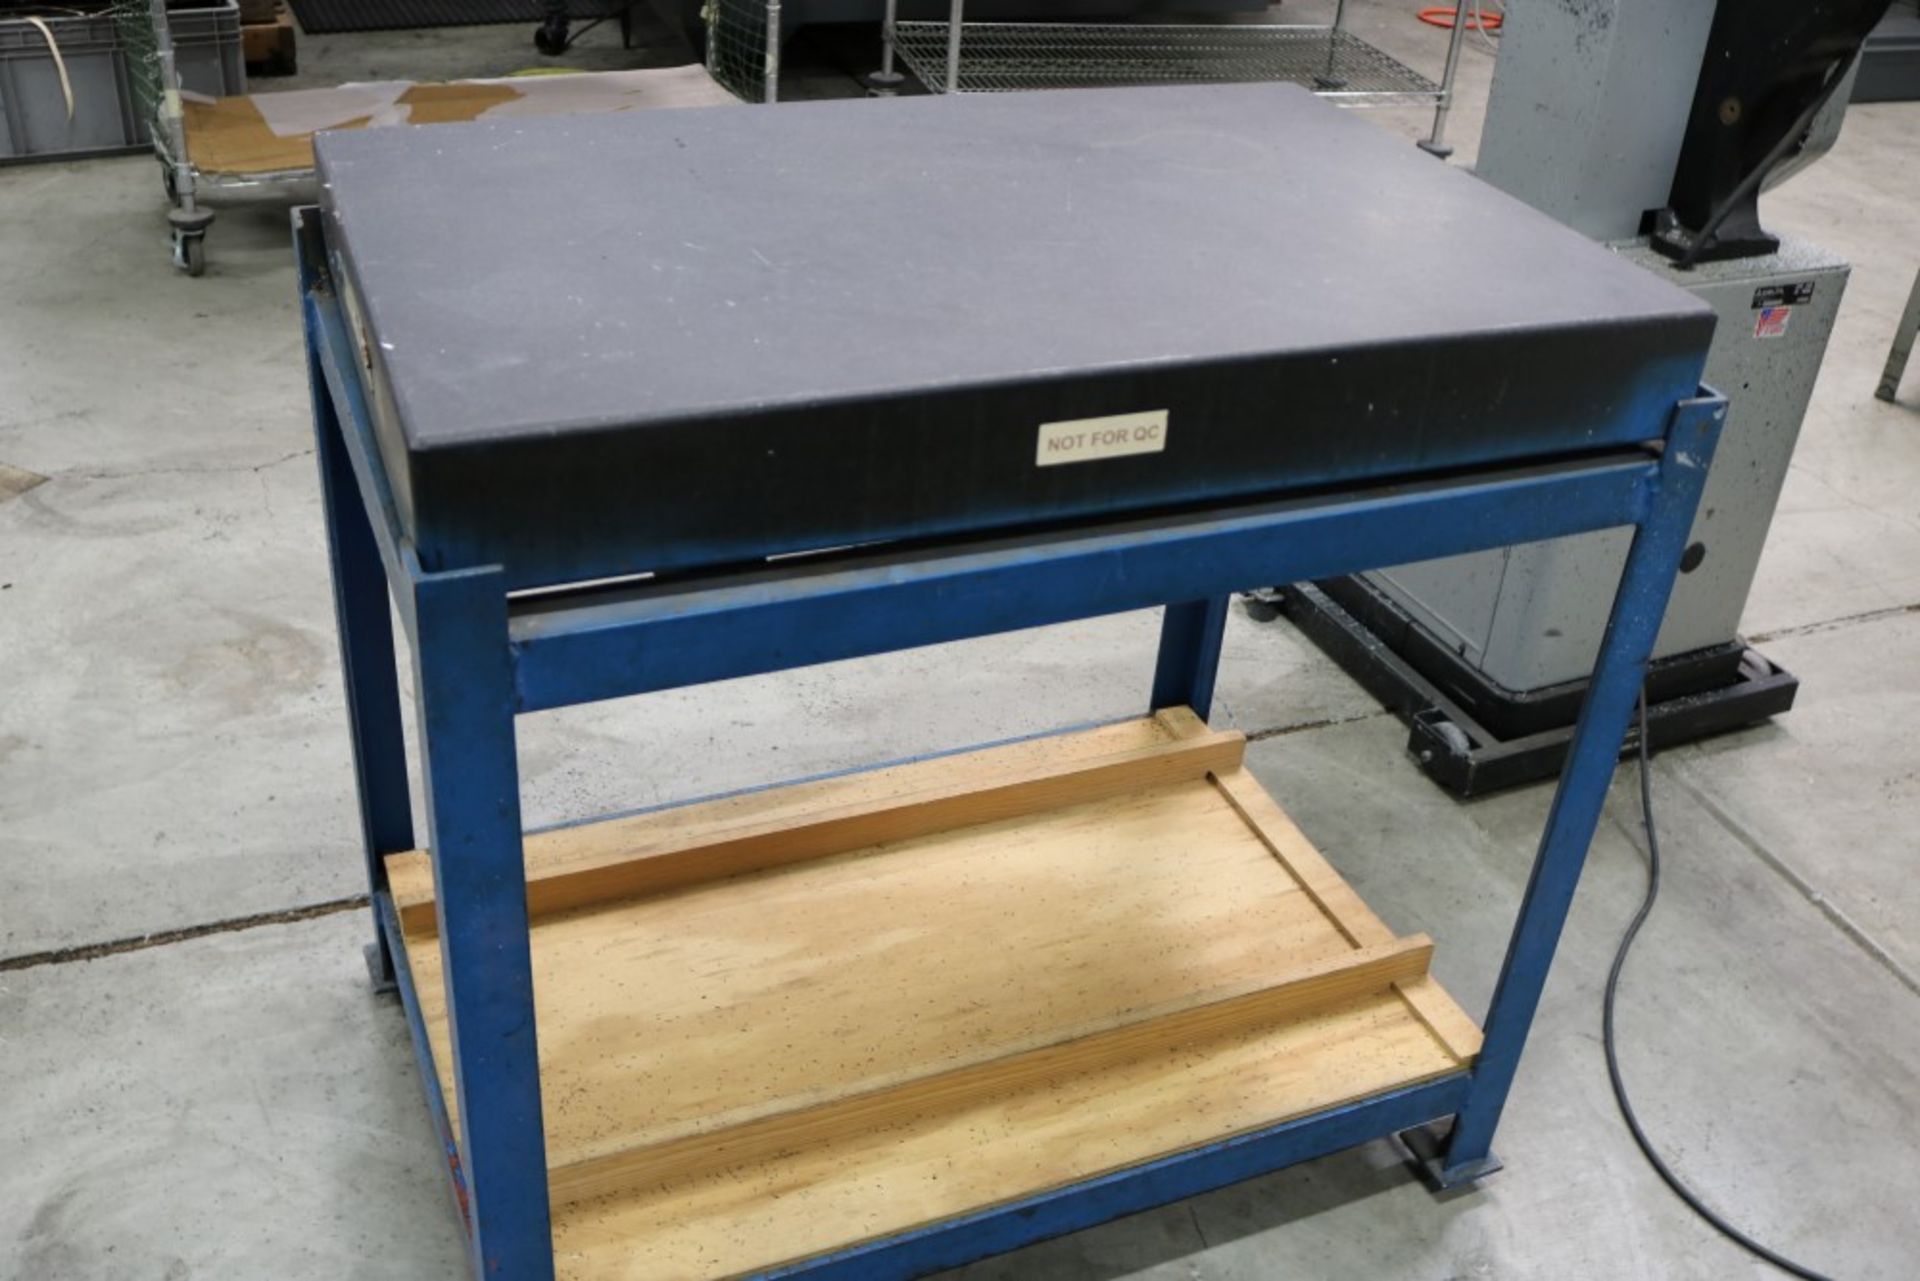 Standridge Granite Inspection Table on Metal Stand, 2' x 3' x 4" - Image 3 of 4